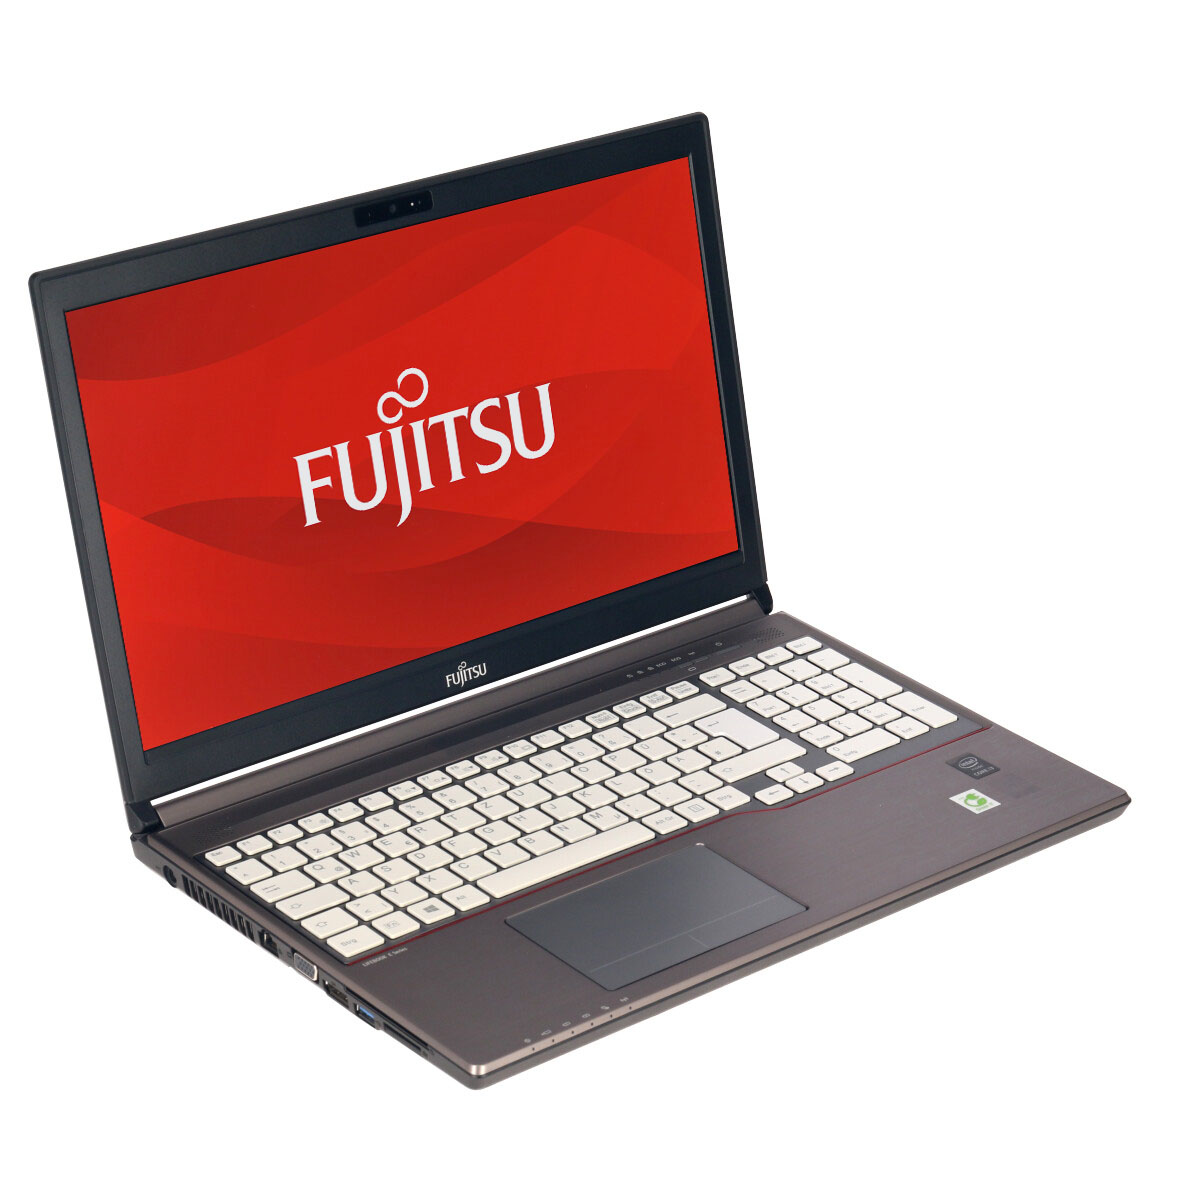 Fujitsu LifeBook E756 (weiße Tastatur)  - shop.bb-net.de